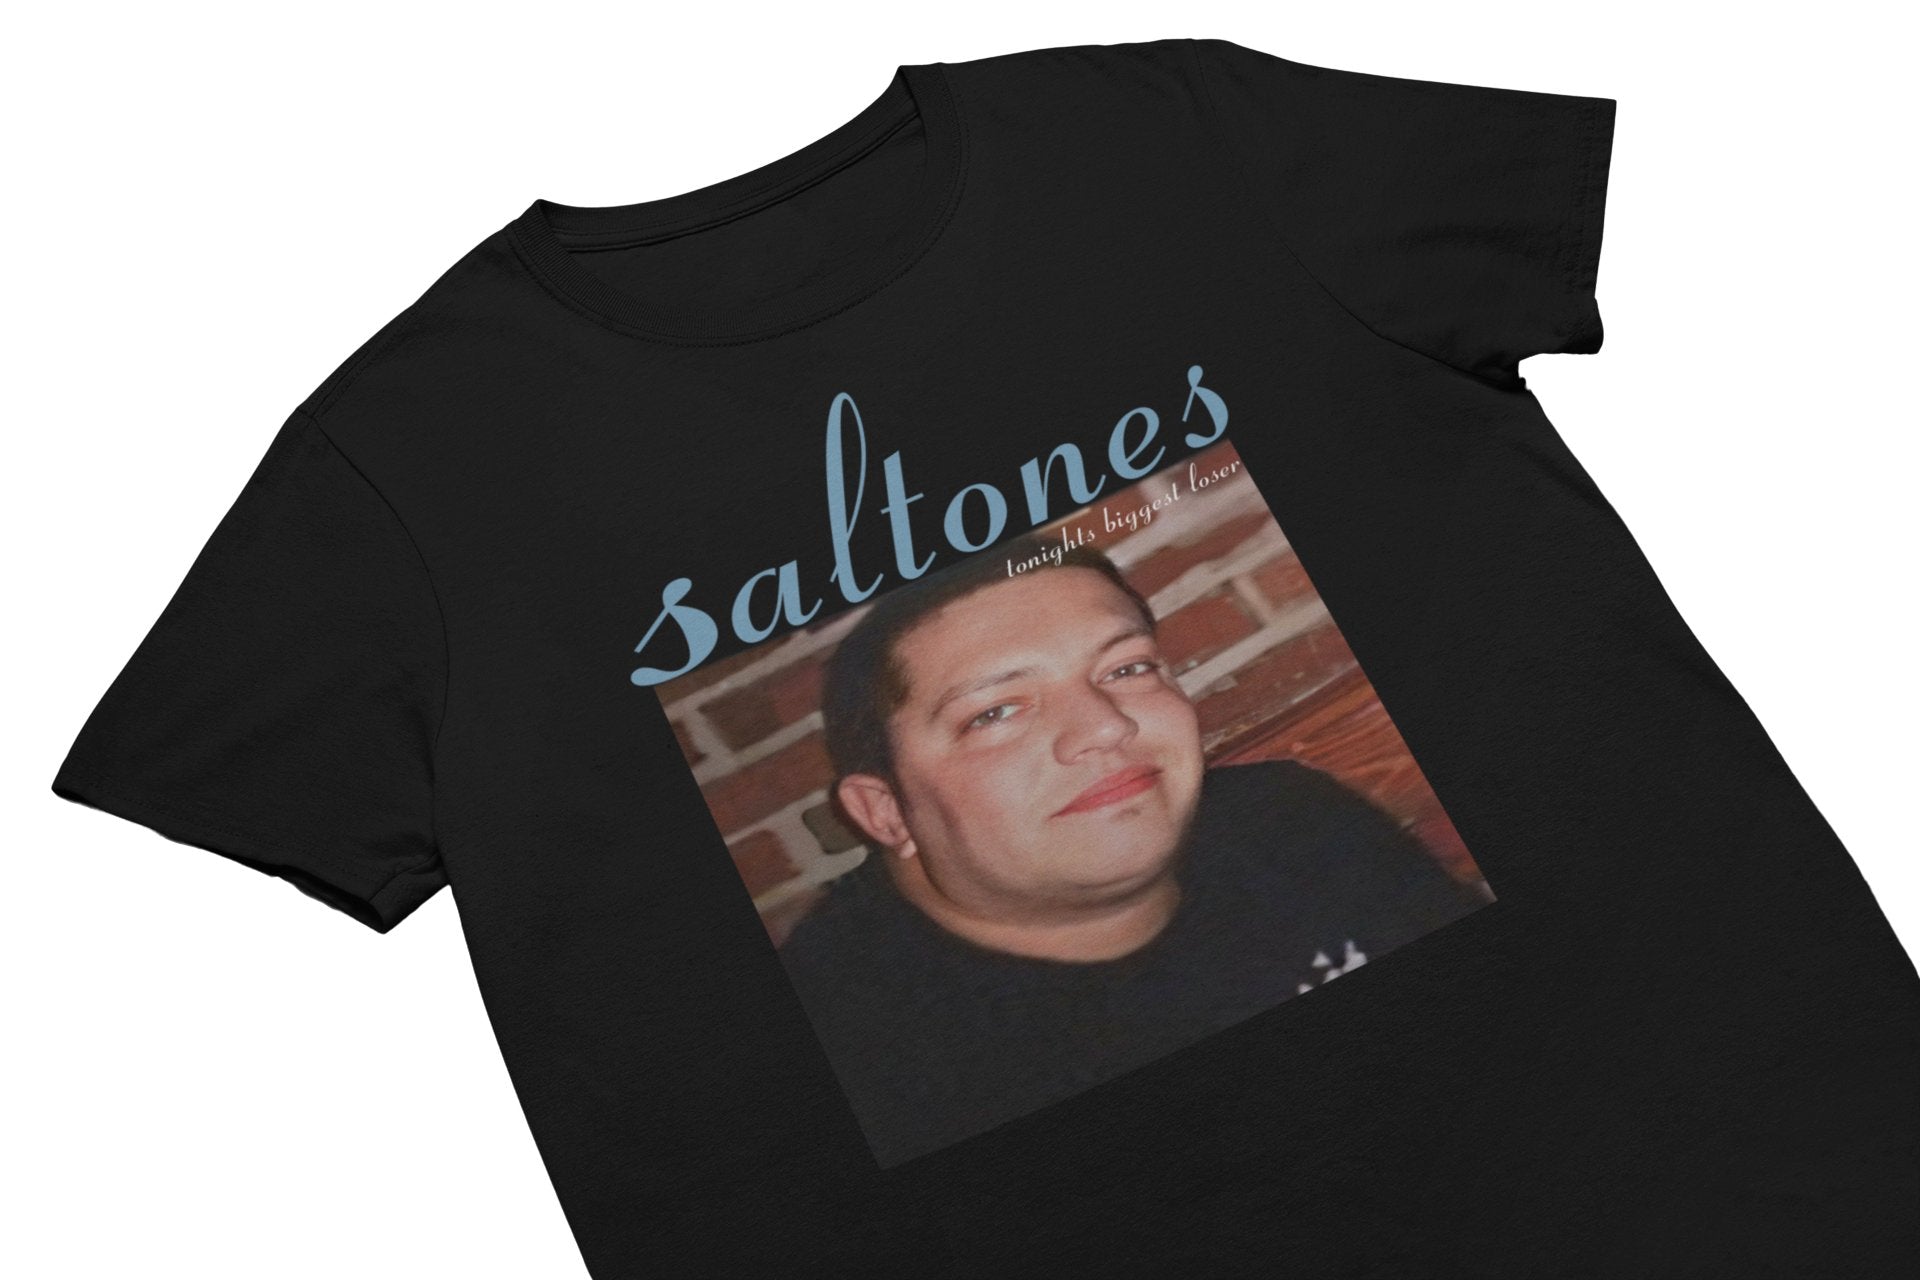 SALTONES - HardShirts